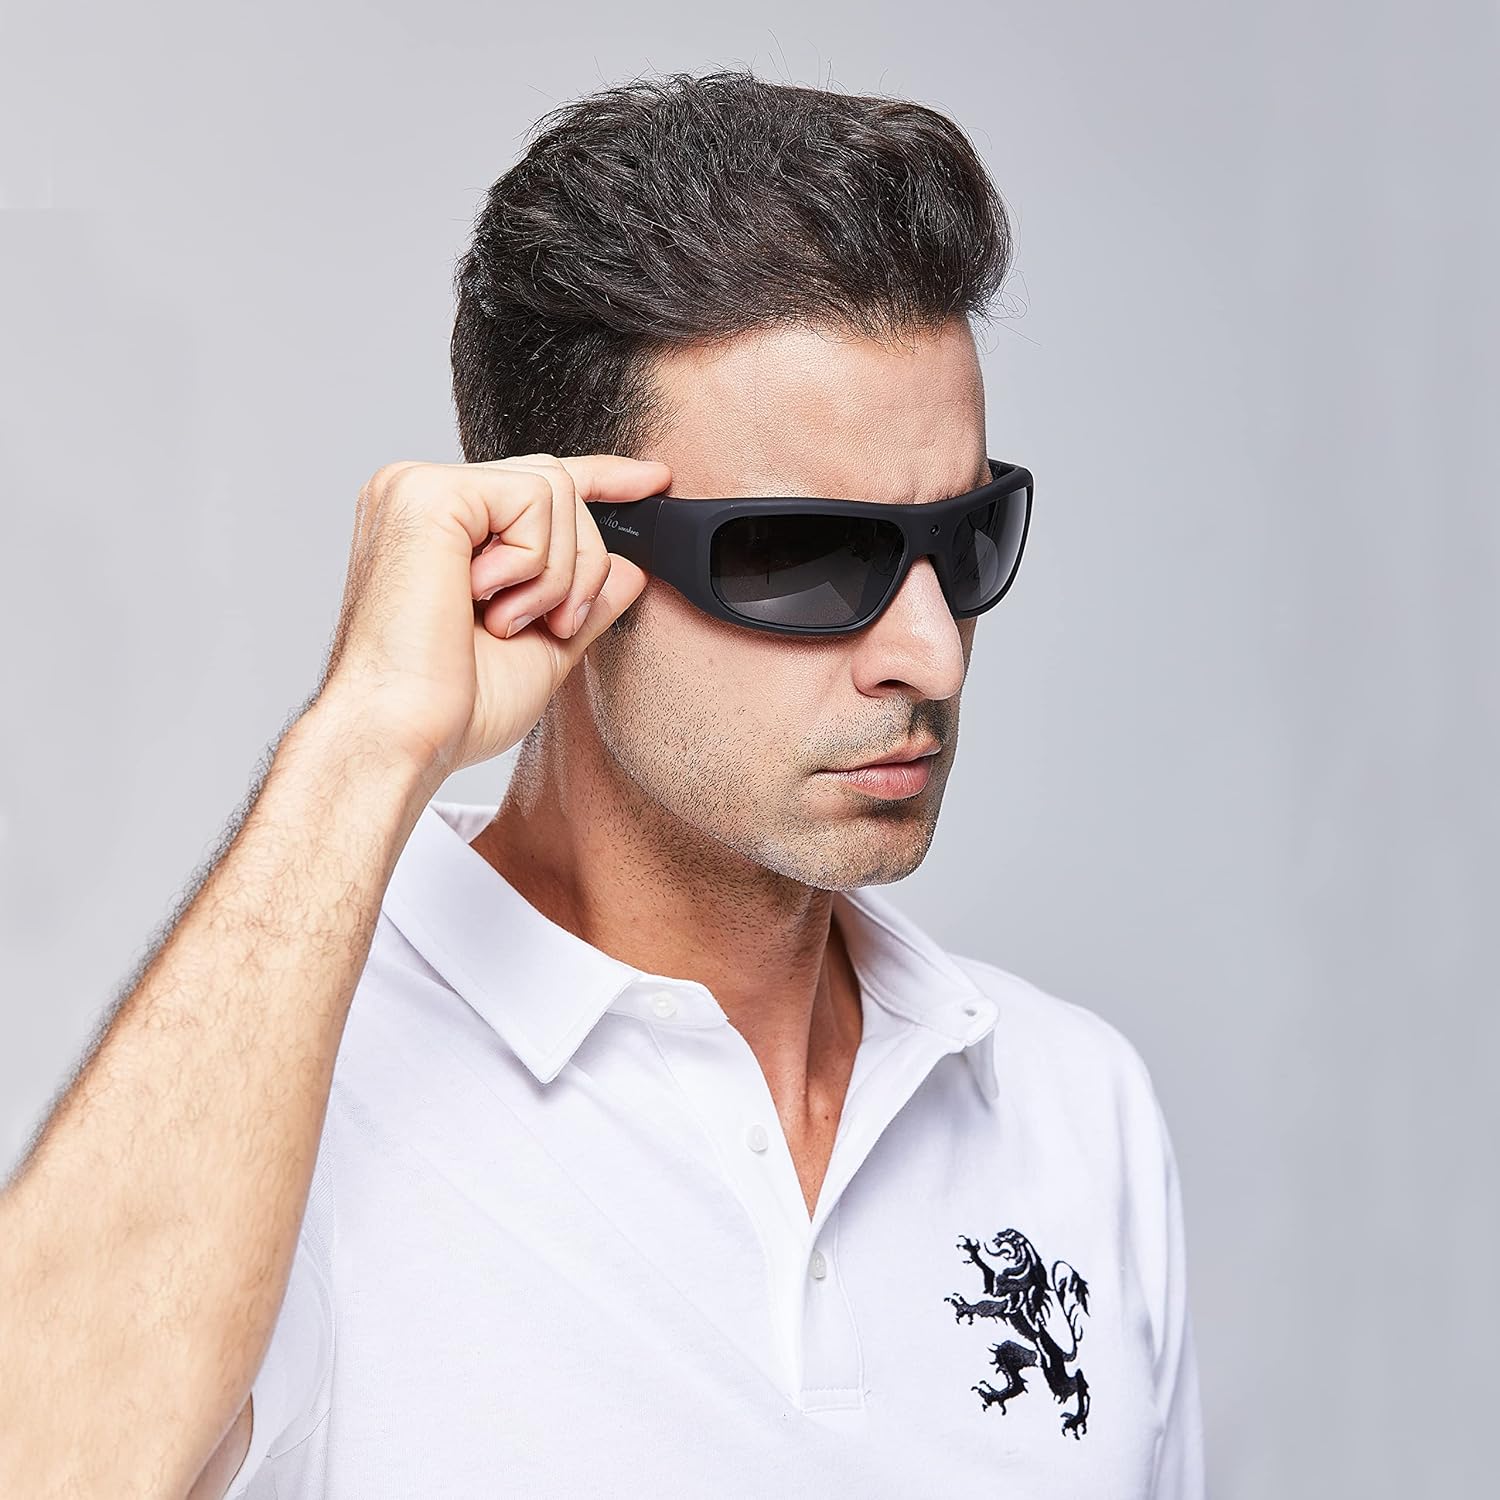 OhO sunshine OhO 32G Camera Glasses,Super Slim 1080P Smart Glasses with UV400 Sunglasses Lens for Outdoor Sport